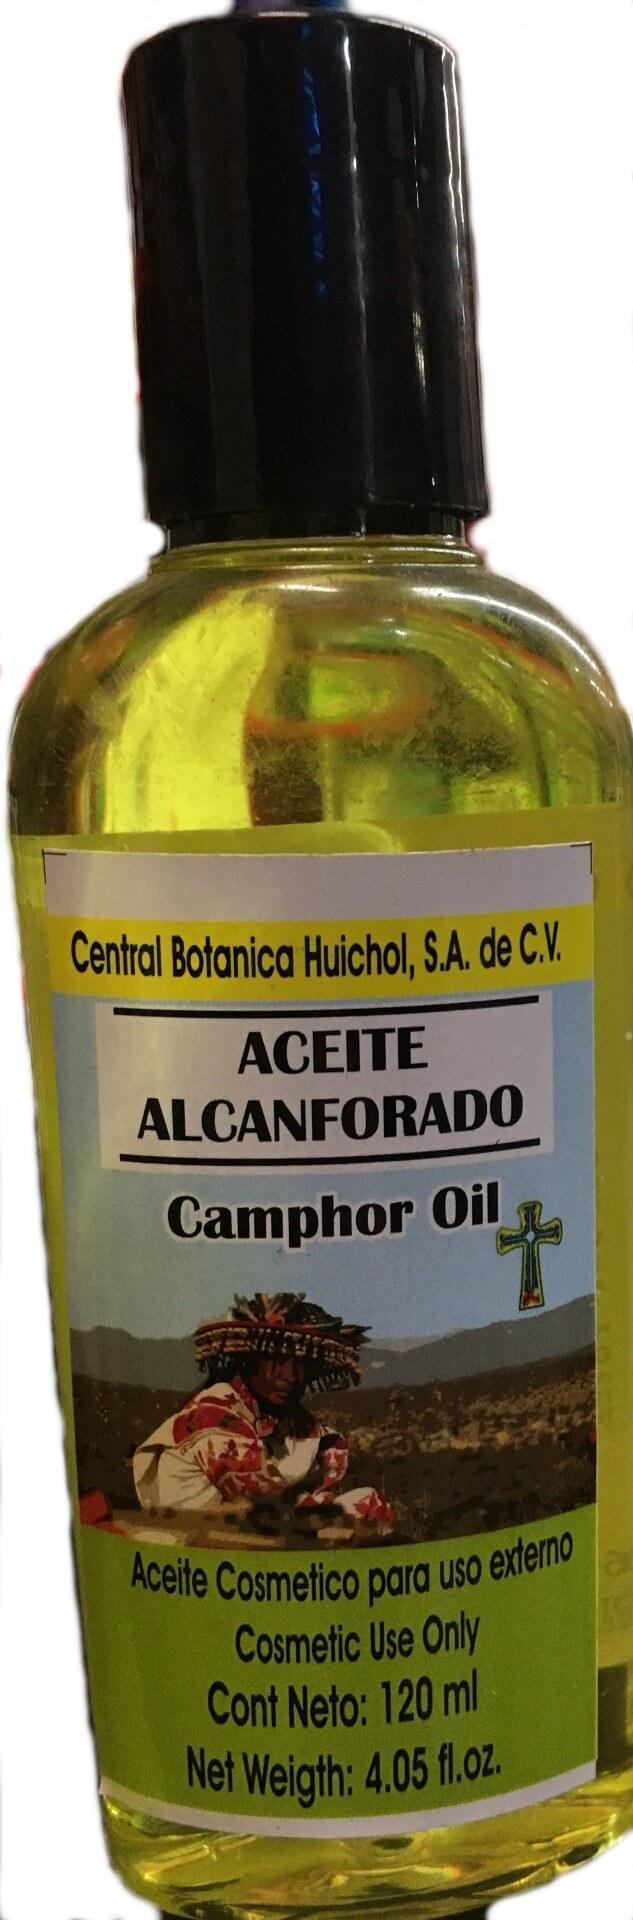 Central Botica Huichol S.A de C.V - Camphor Oil 4.05oz